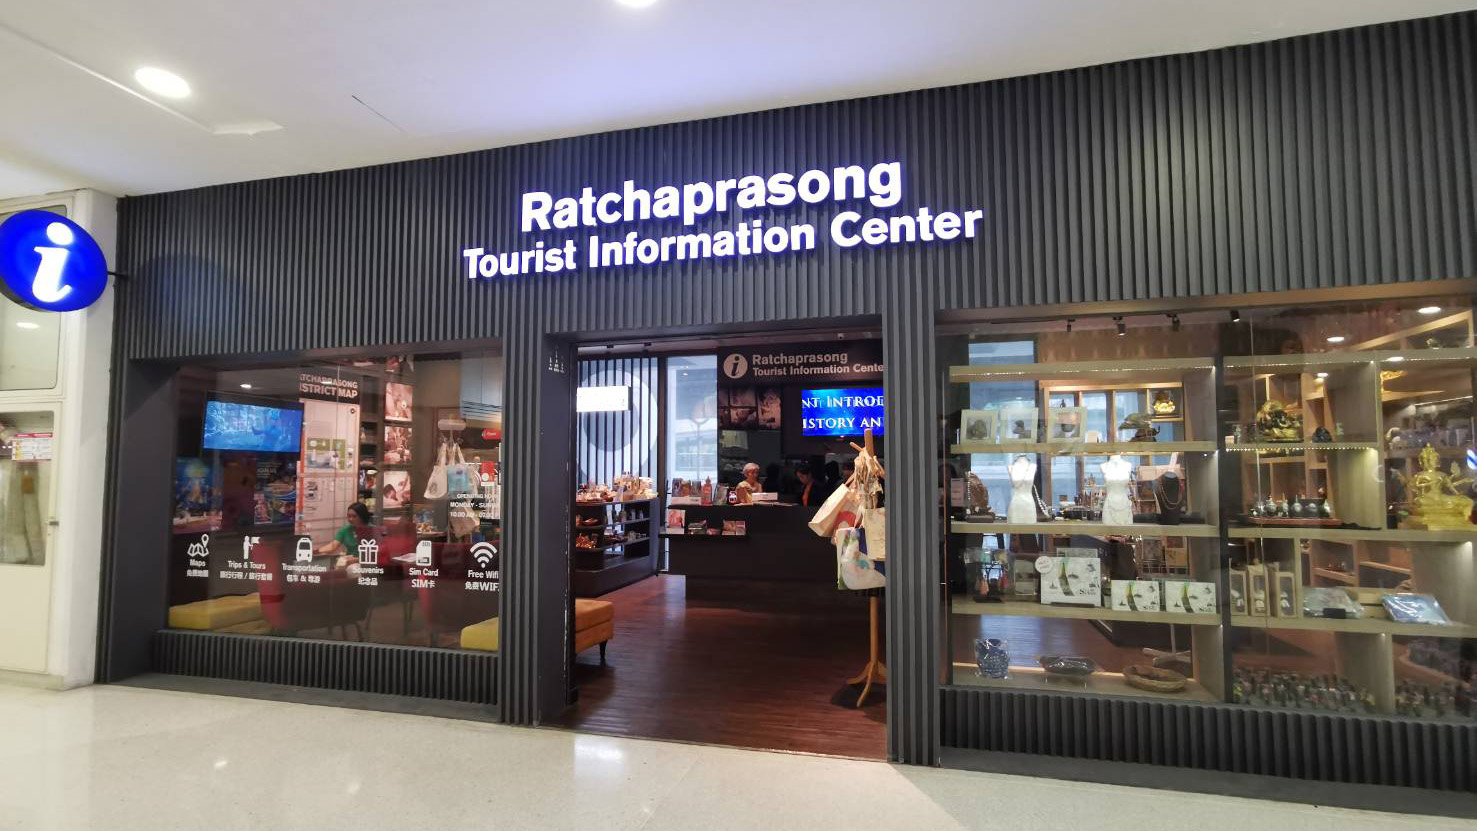 tour information center